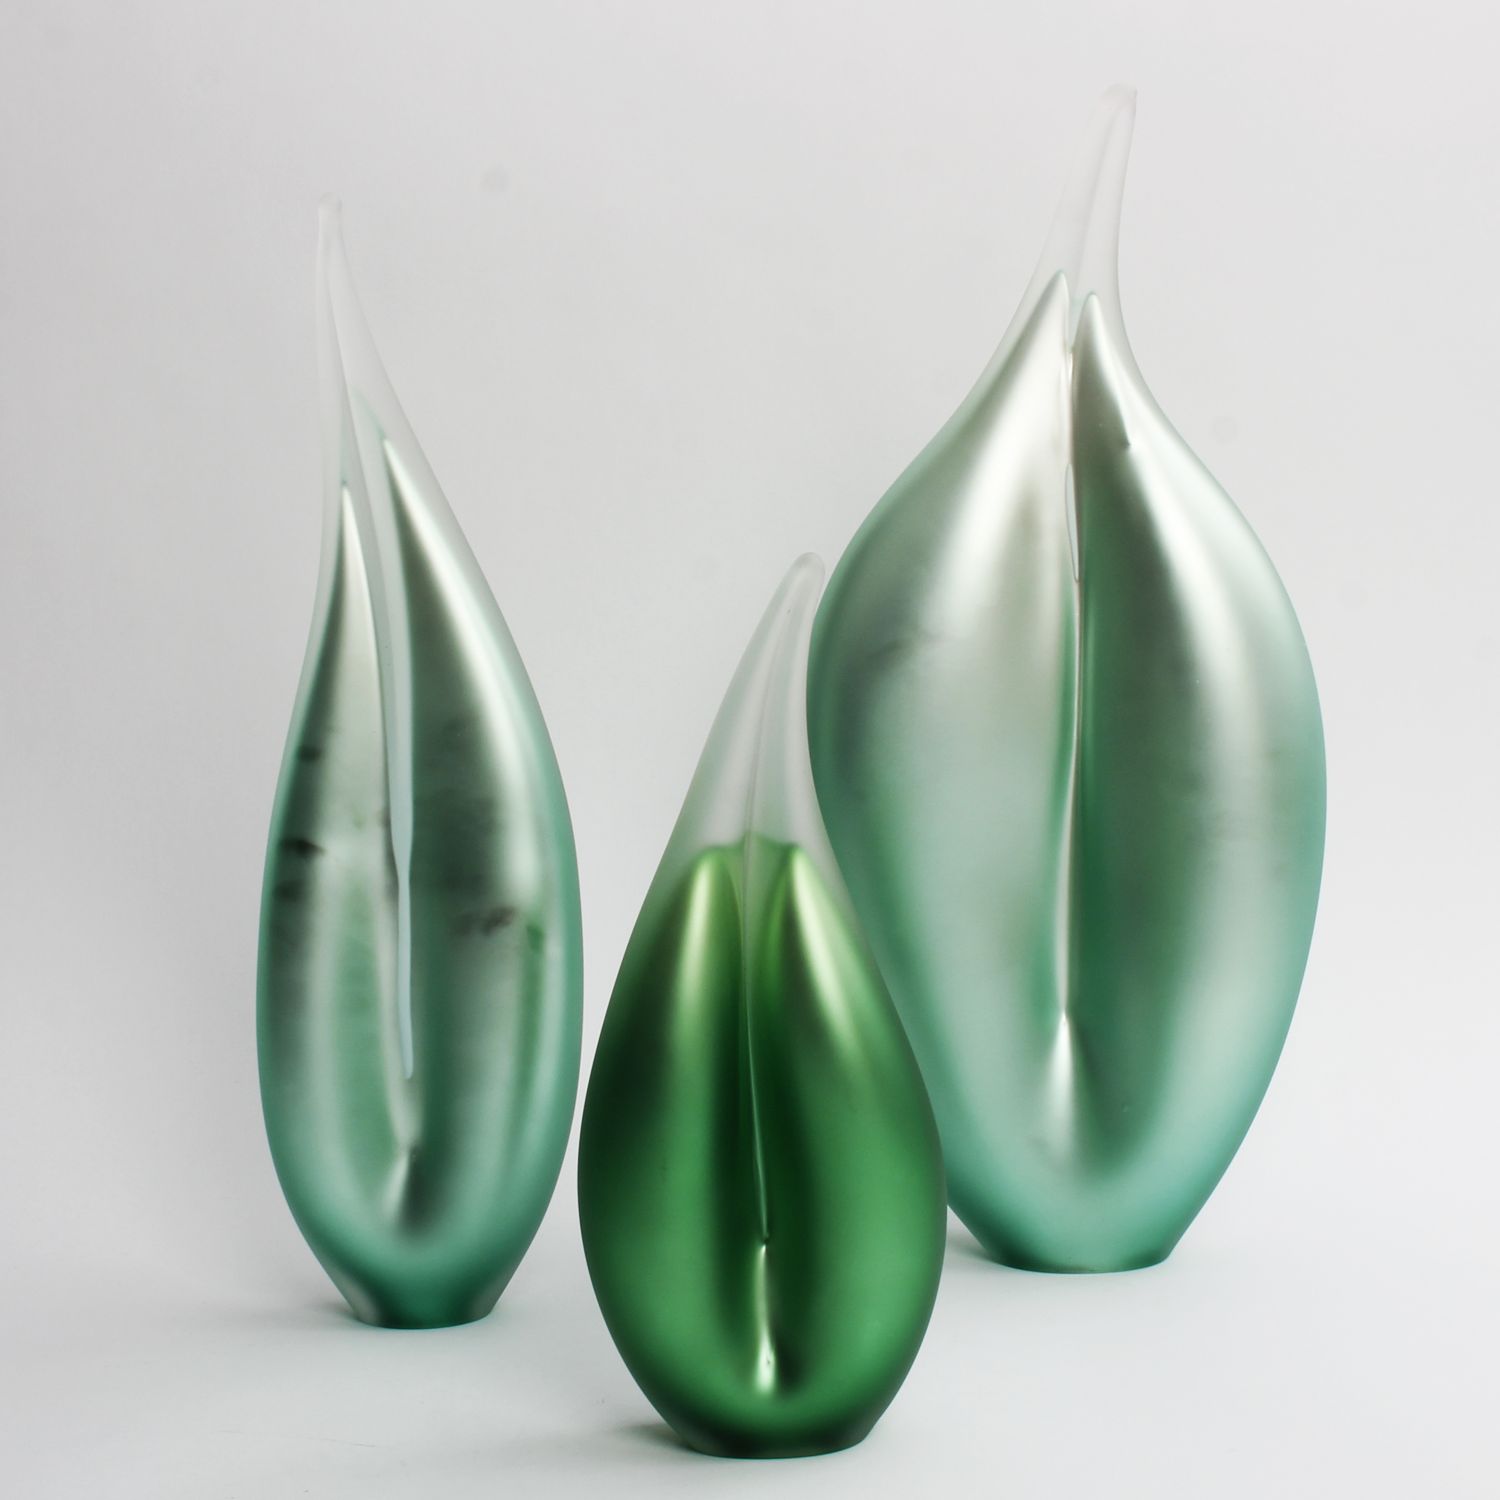 Soffi Studio: Medium Green Flame Product Image 2 of 2